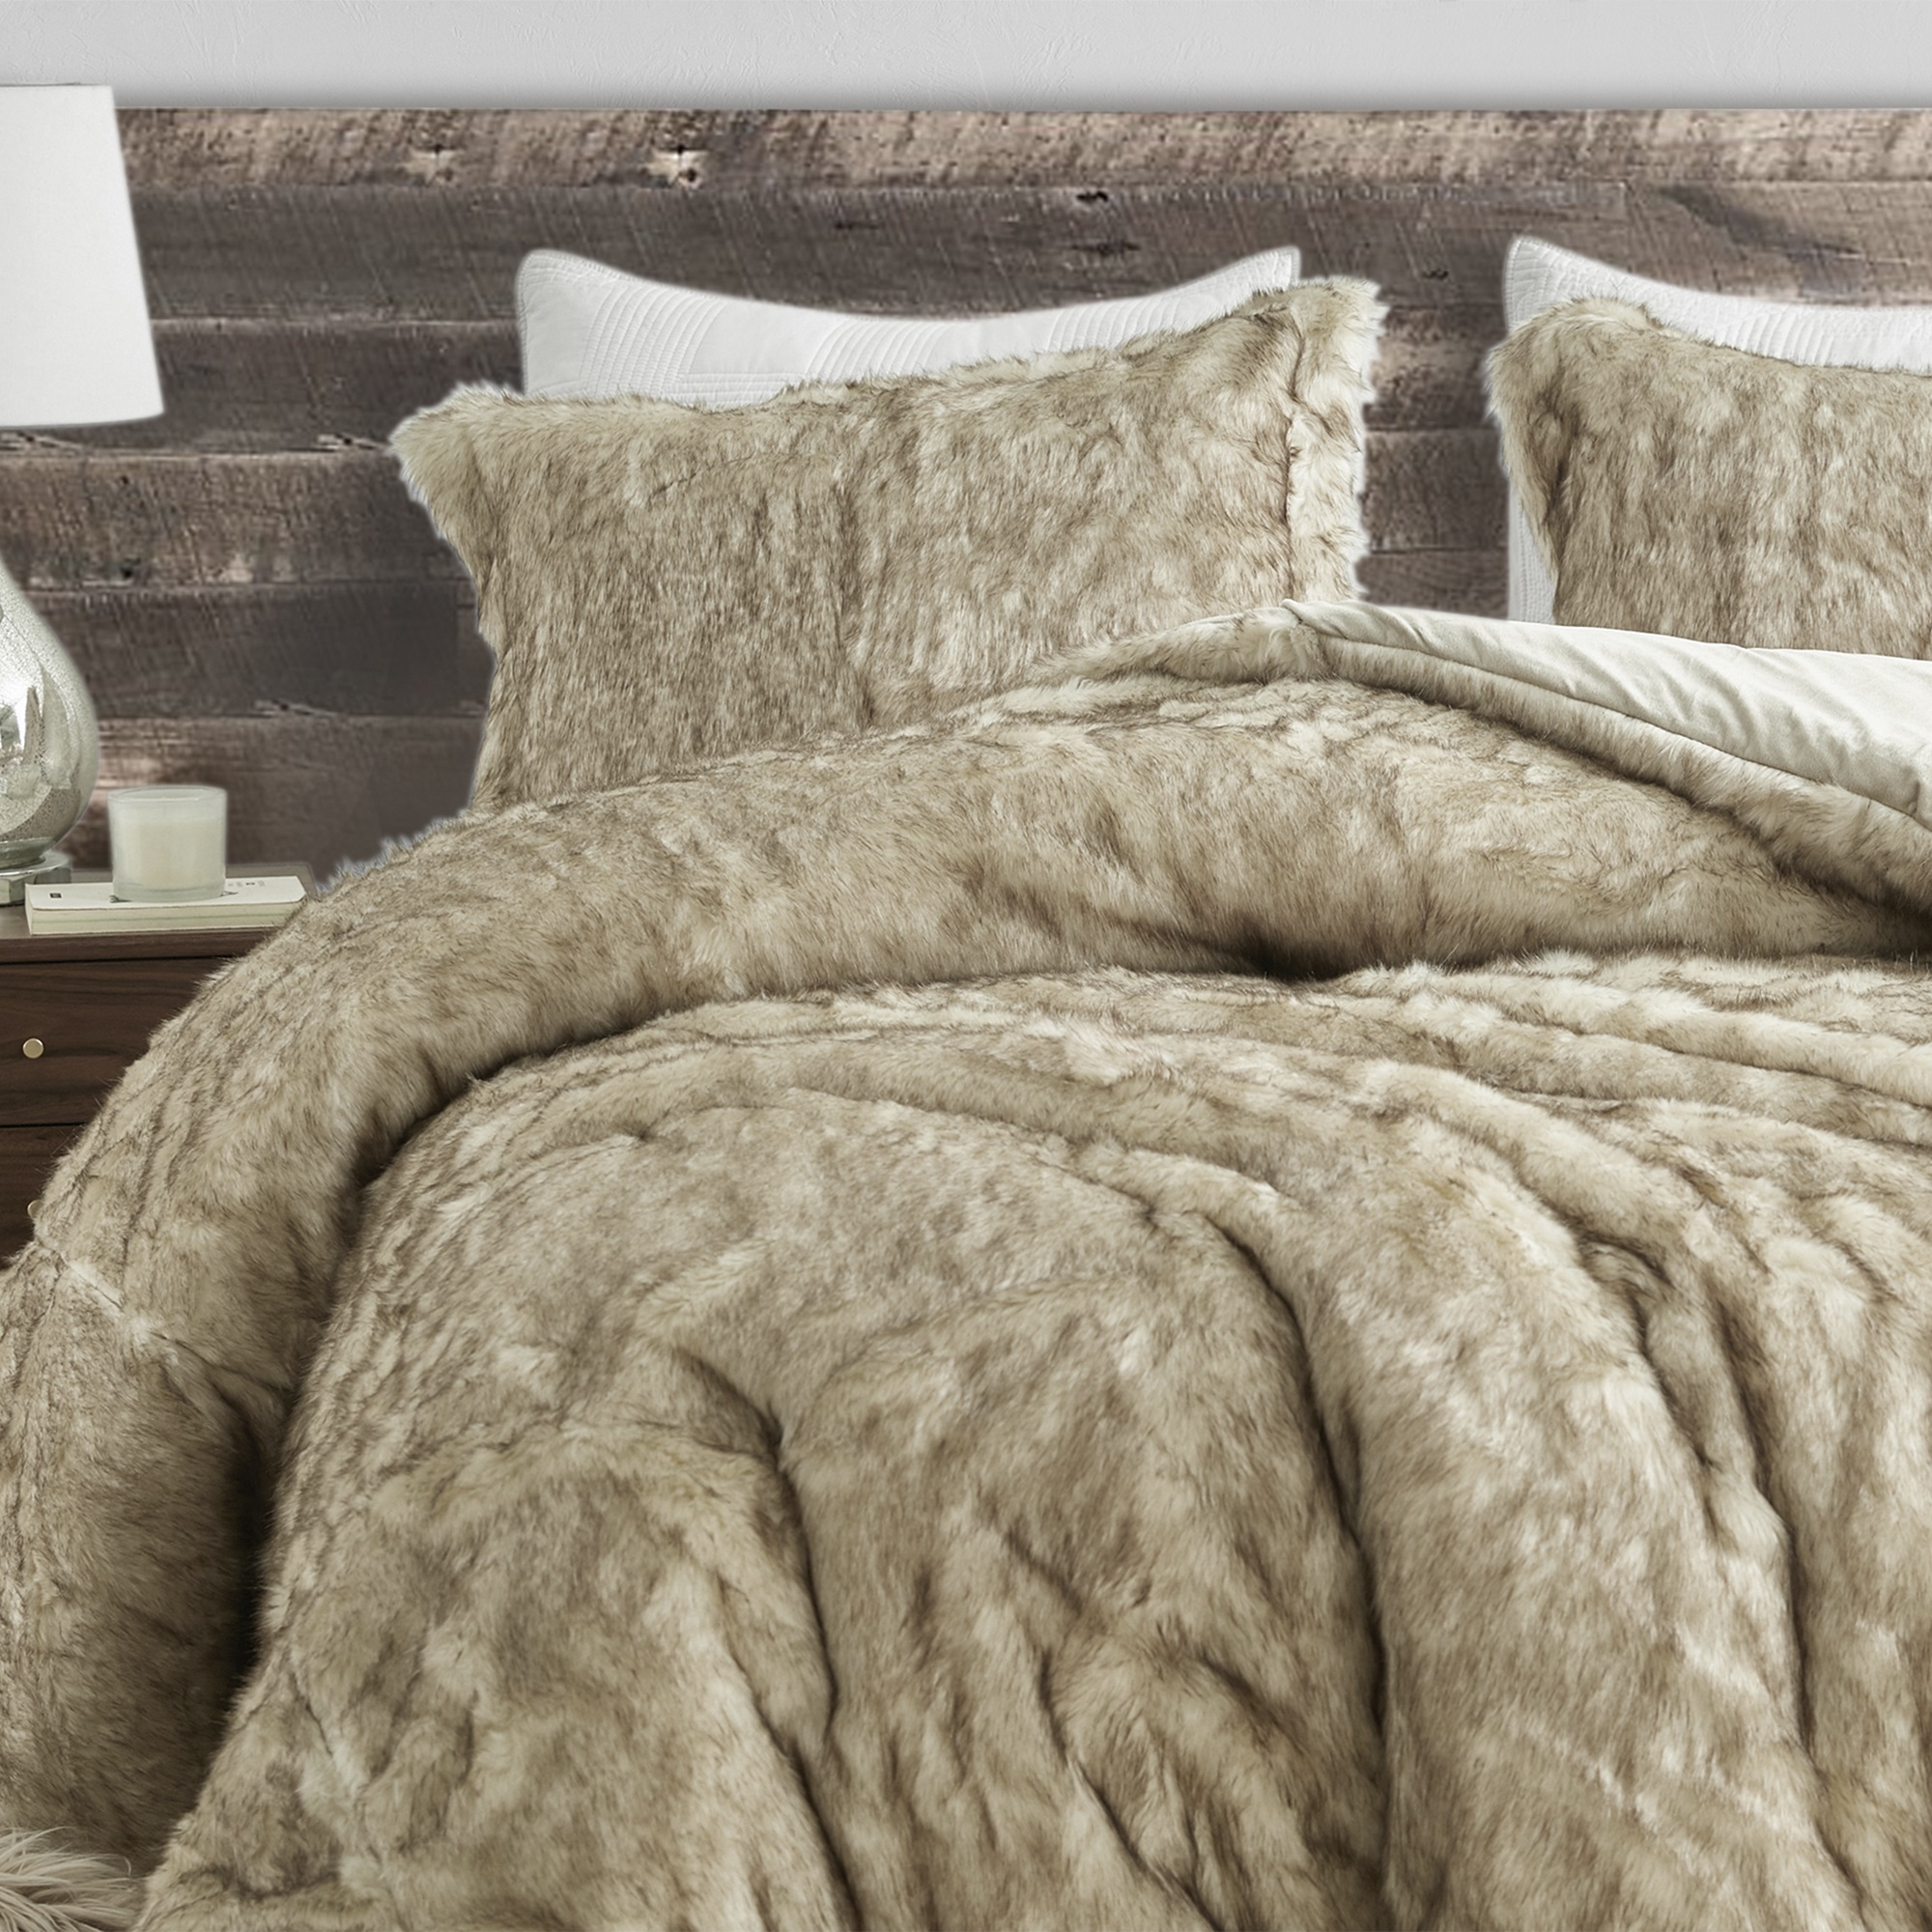 Coma Inducer Oversized Comforter - Arctic Bear - Tundra Brown